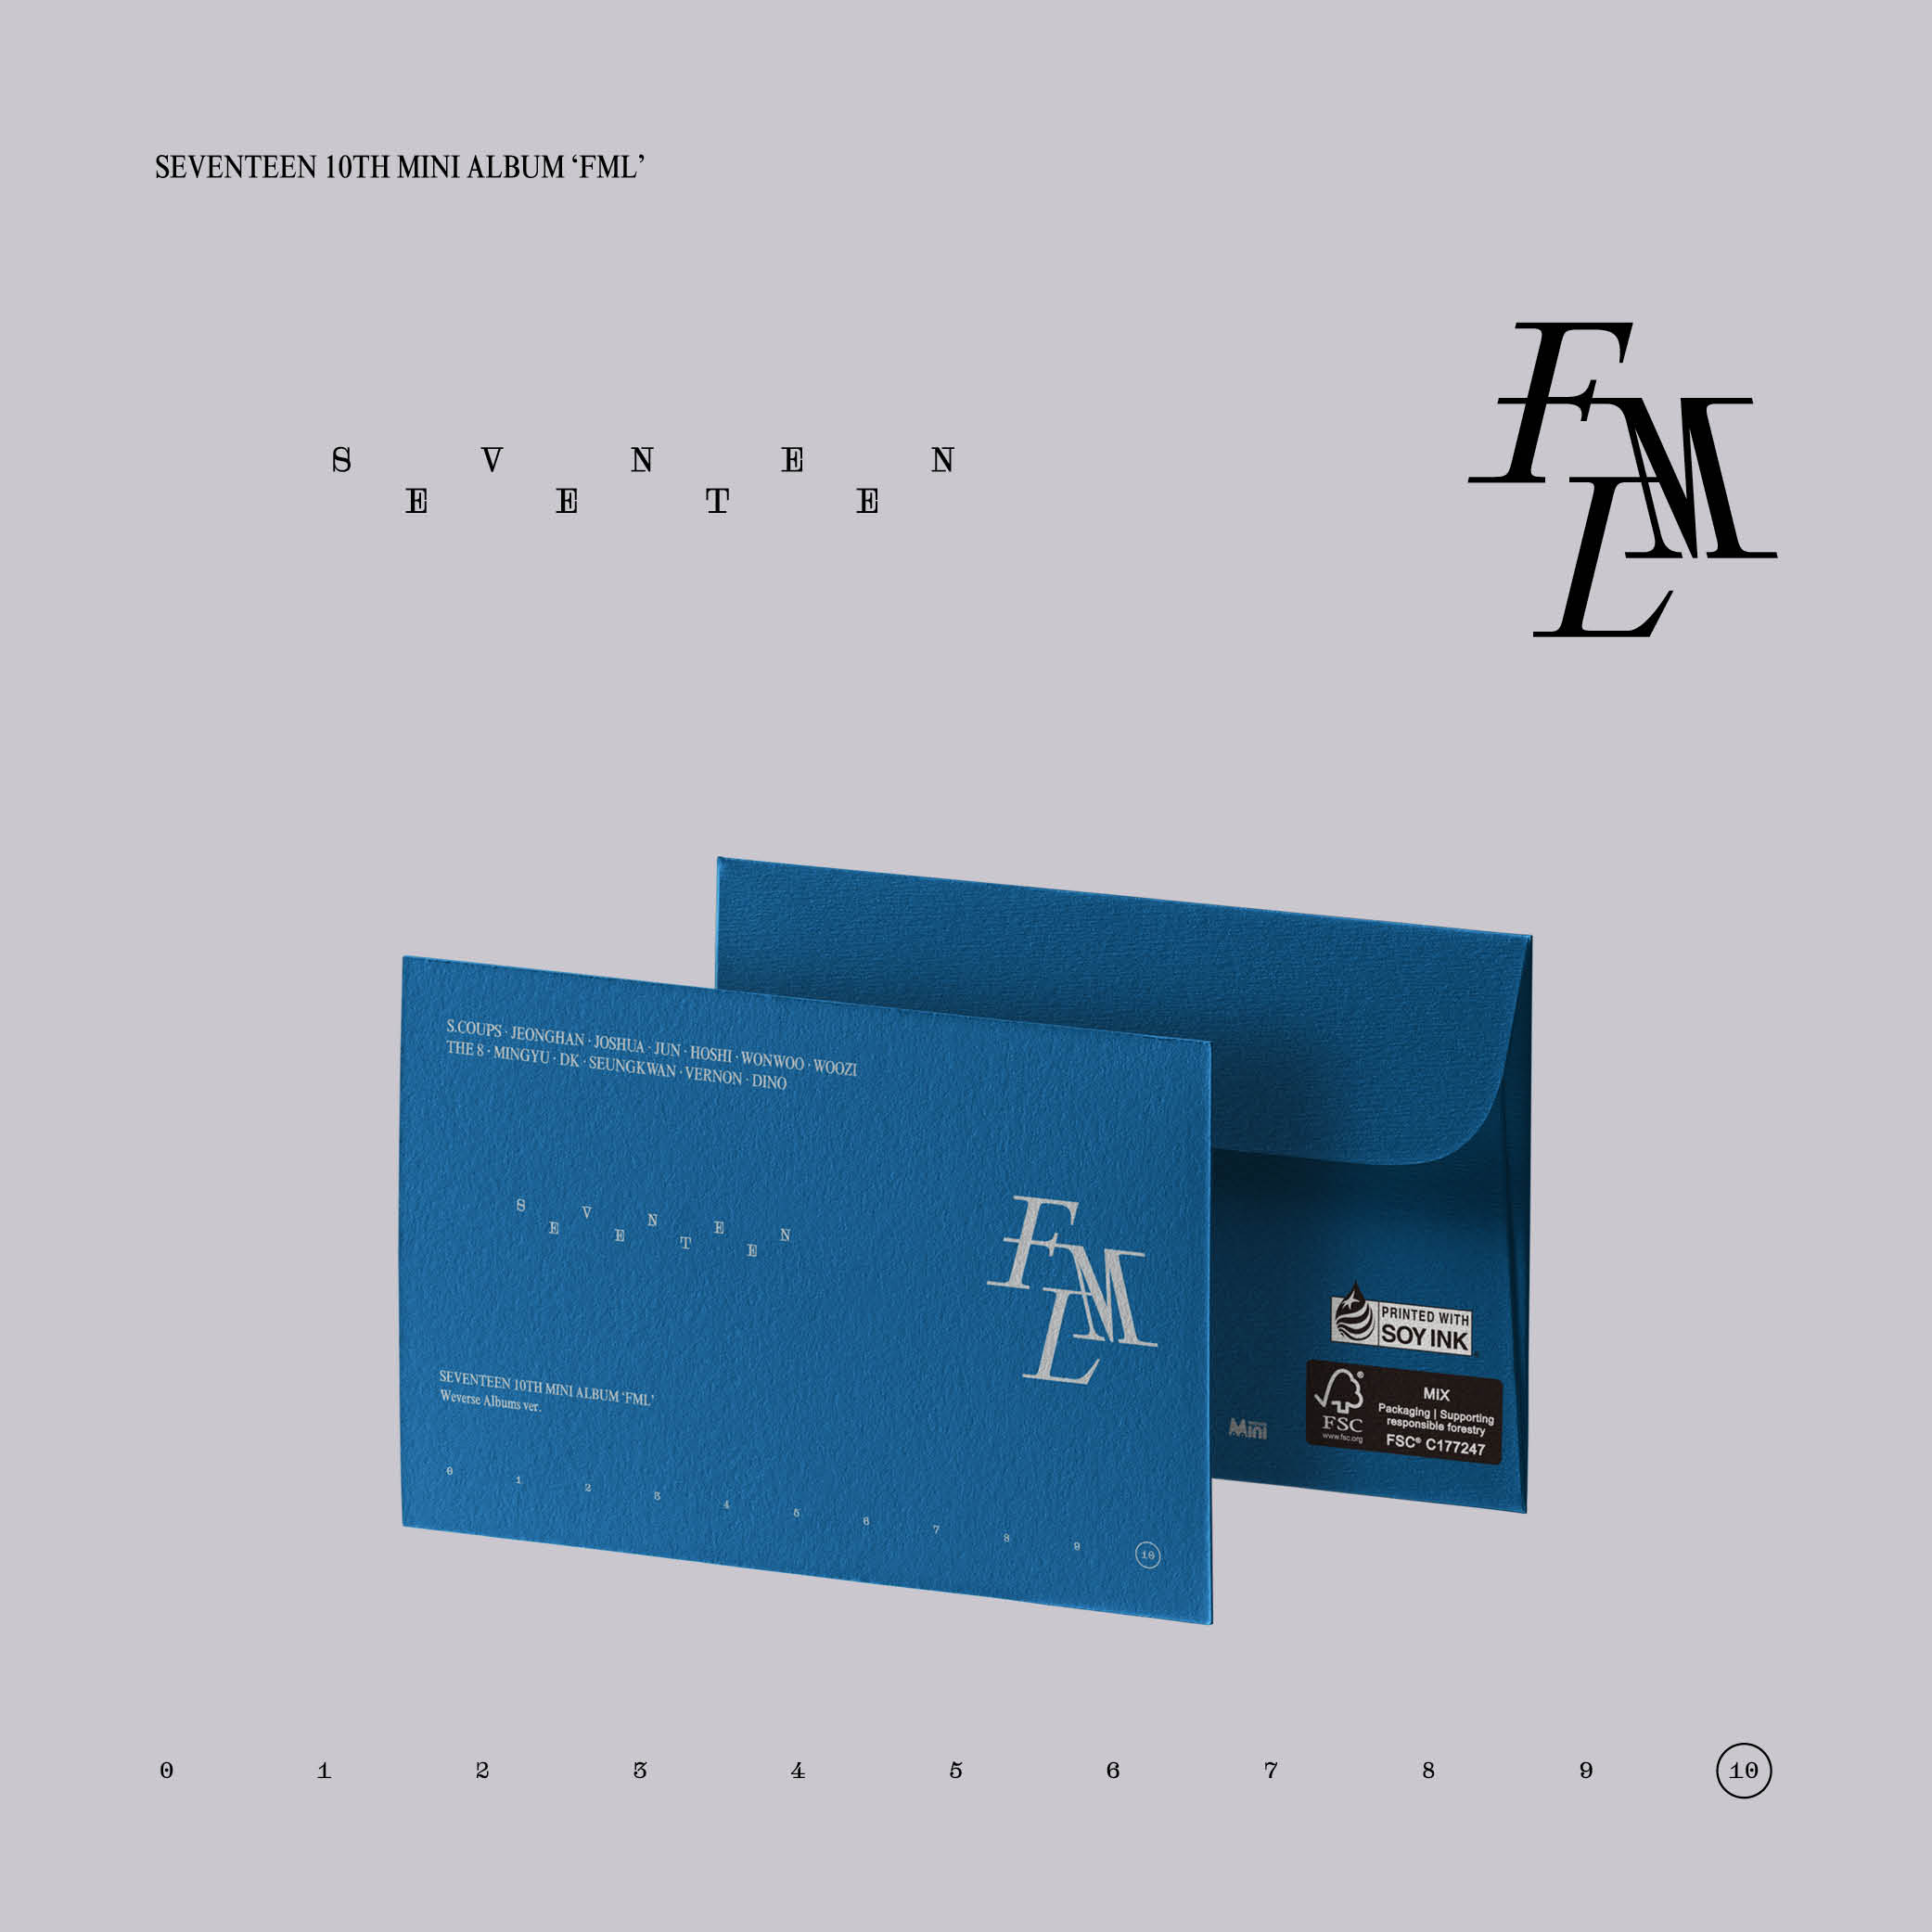 [全款 裸专] [Ktown4u Special Gift] SEVENTEEN - 10th Mini Album [FML] (Weverse Albums ver.)_MAGNETIZE1998_率宽引力